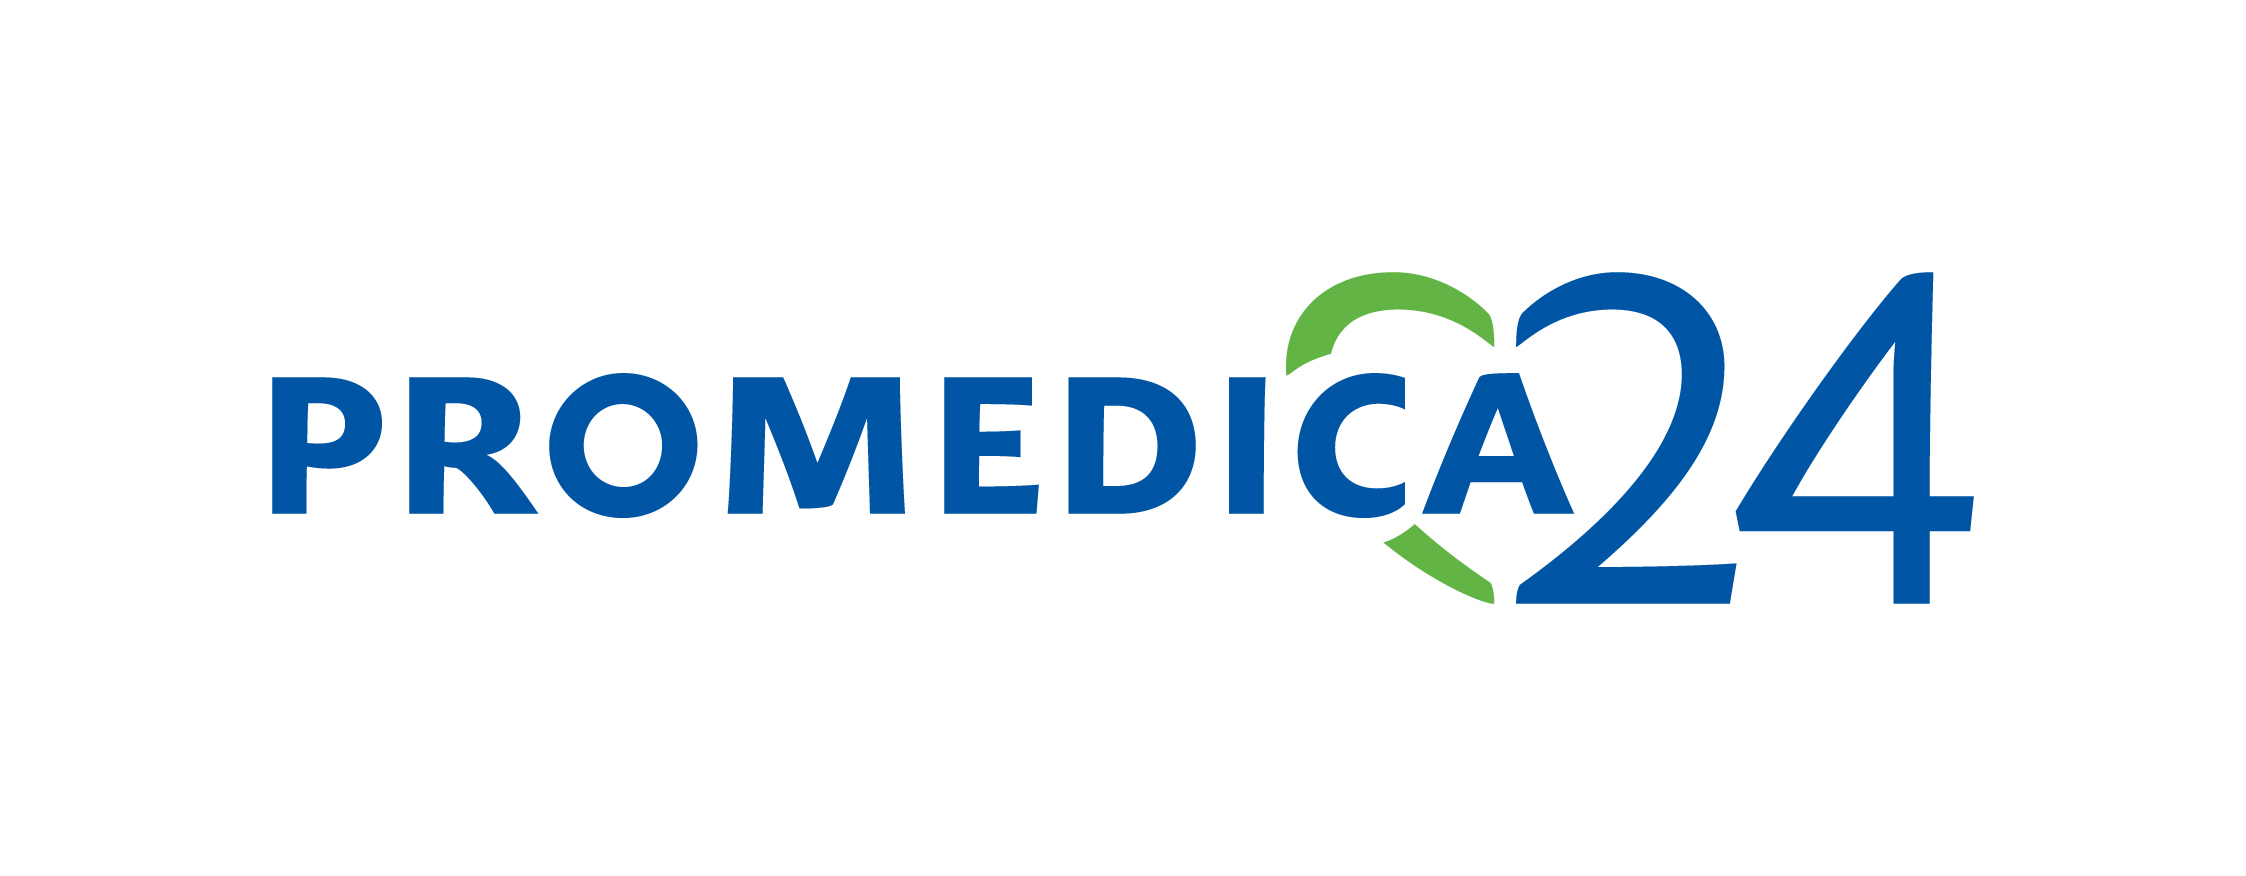 Promedica24 logo